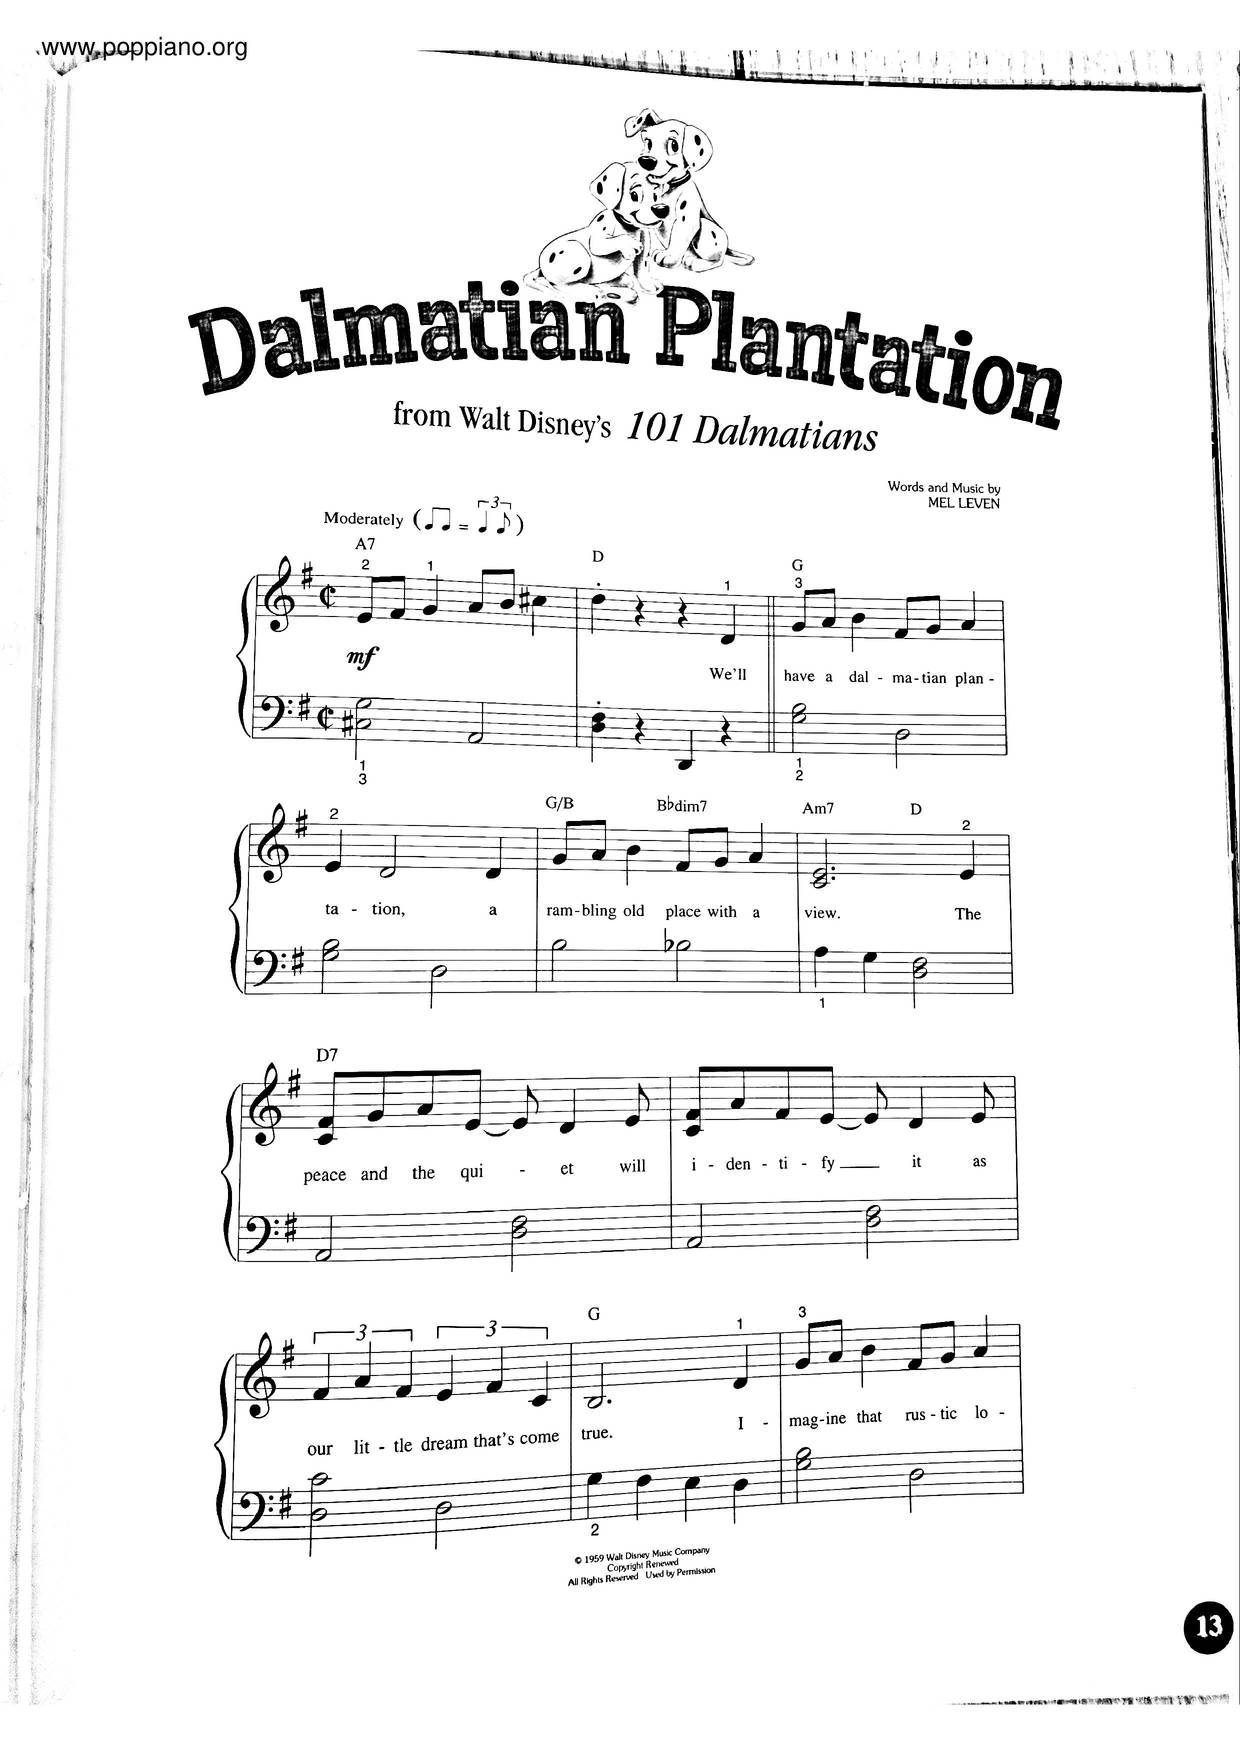 101 Dalmatians - Dalmatian Plantation Score